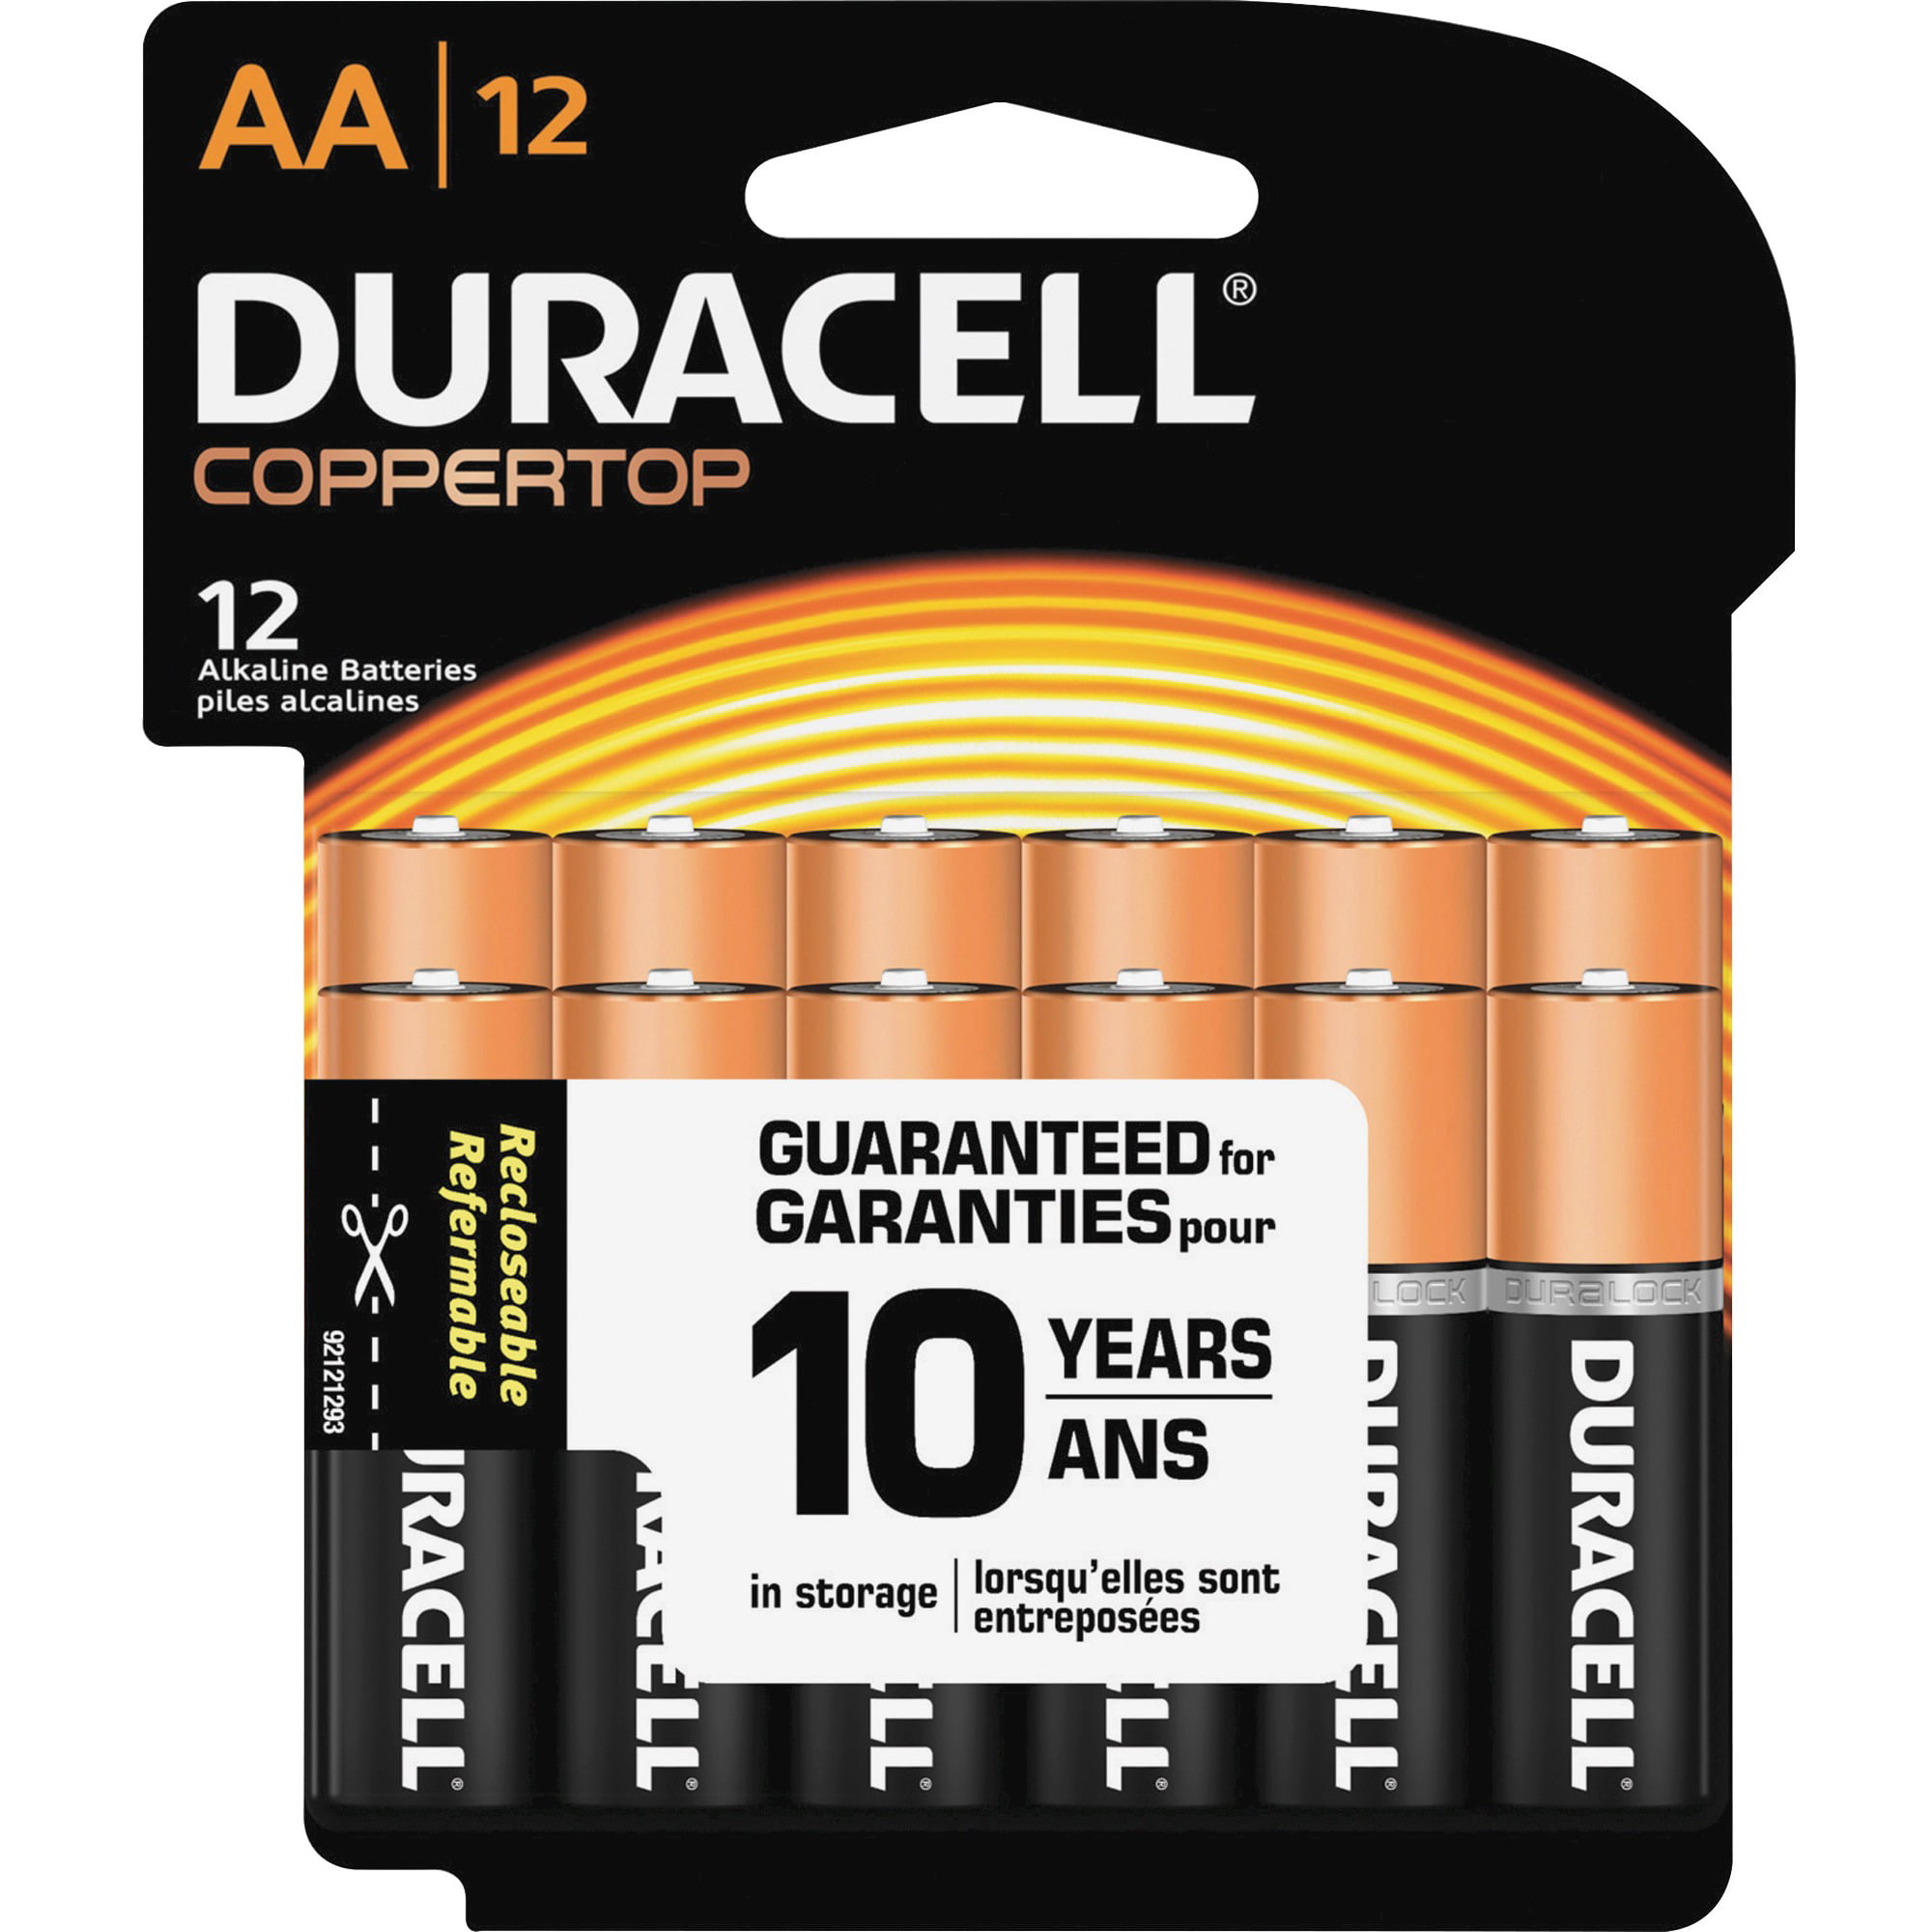 duracell-coppertop-alkaline-aa-battery-mn1500-walmart